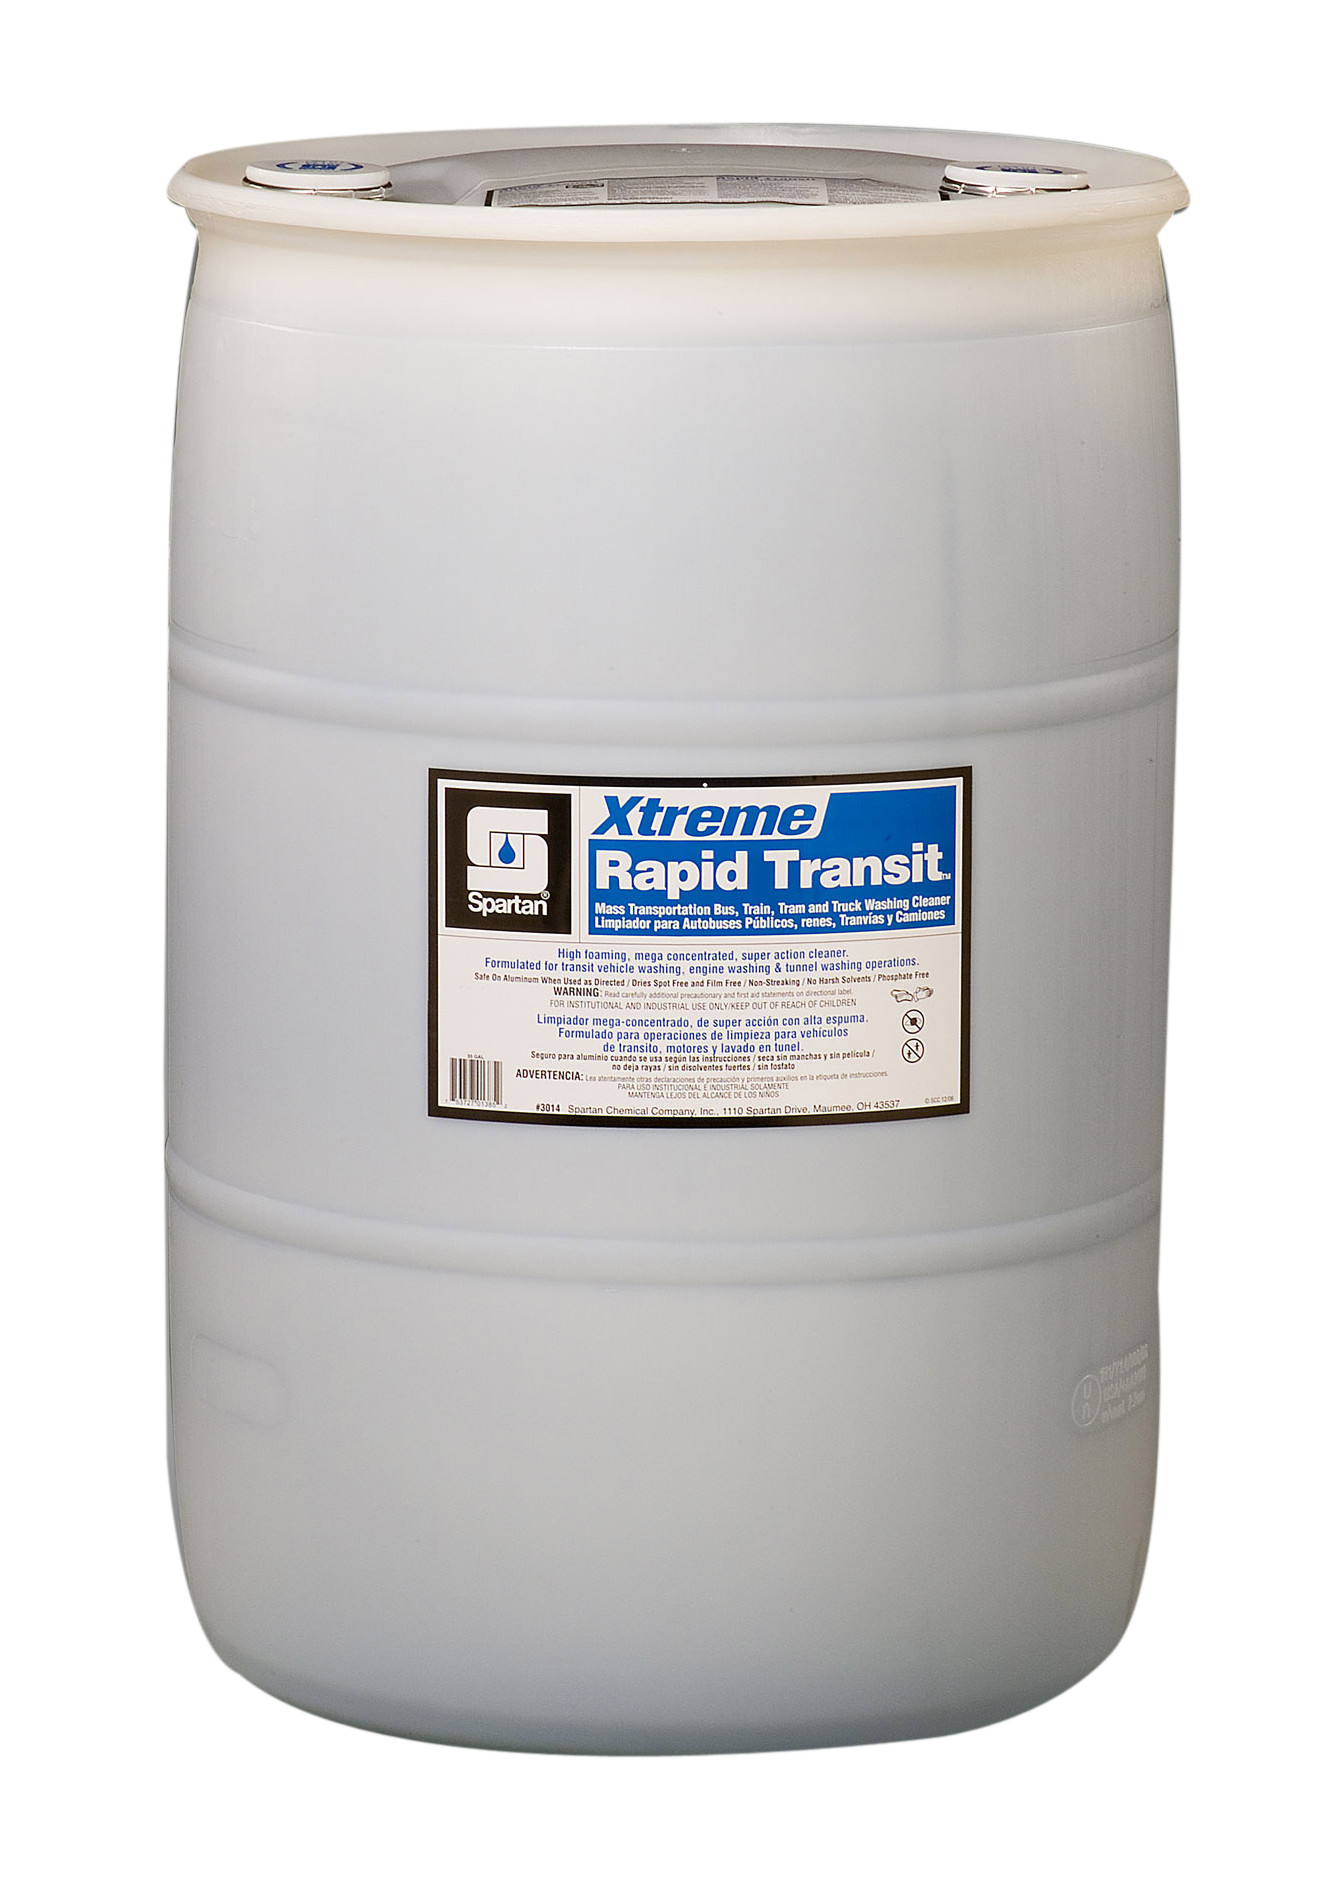 Spartan Chemical Company Xtreme Rapid Transit, 55 GAL DRUM